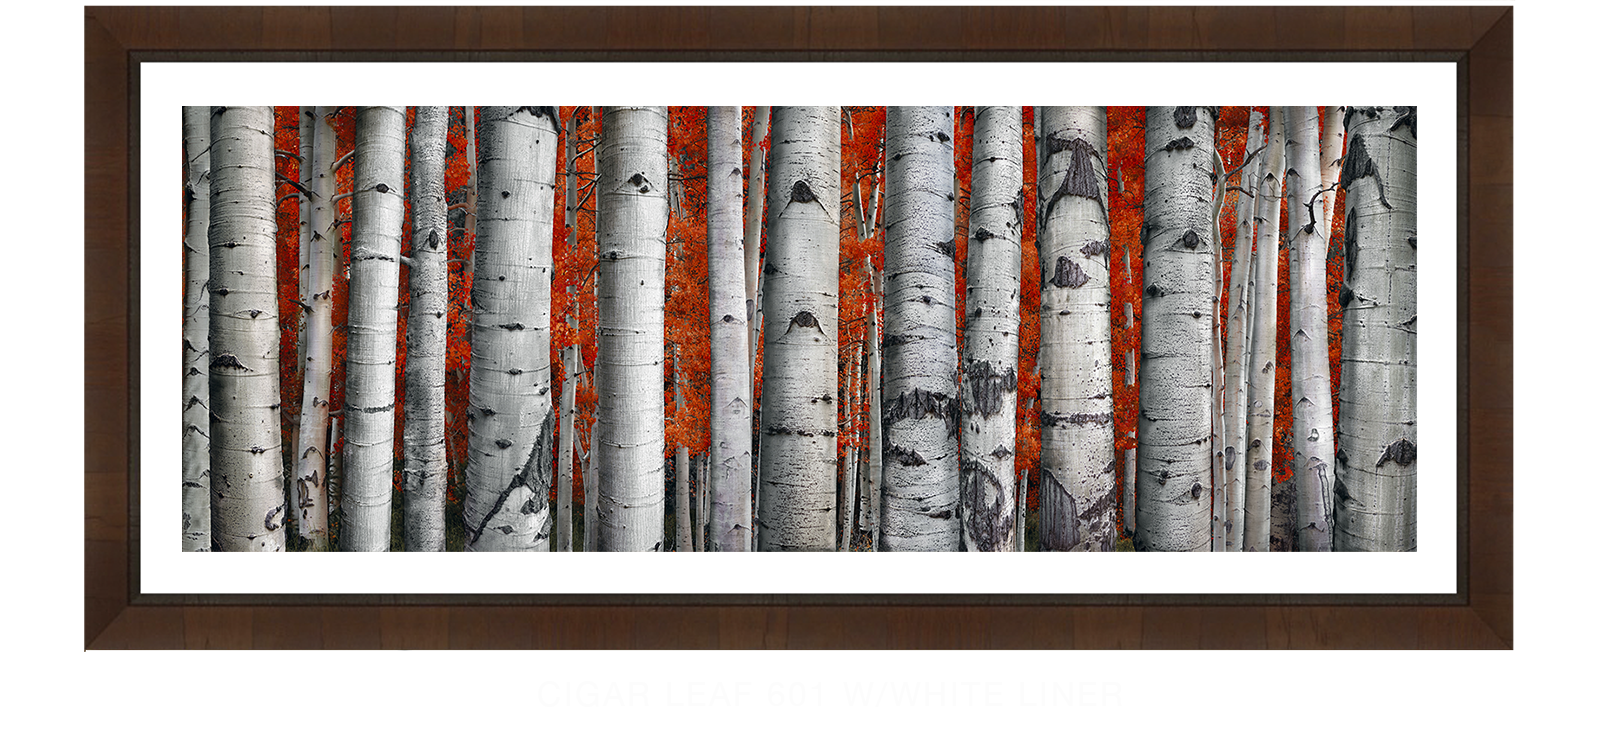 30SASPEN Cigar Leaf 601 w_Wht Liner T